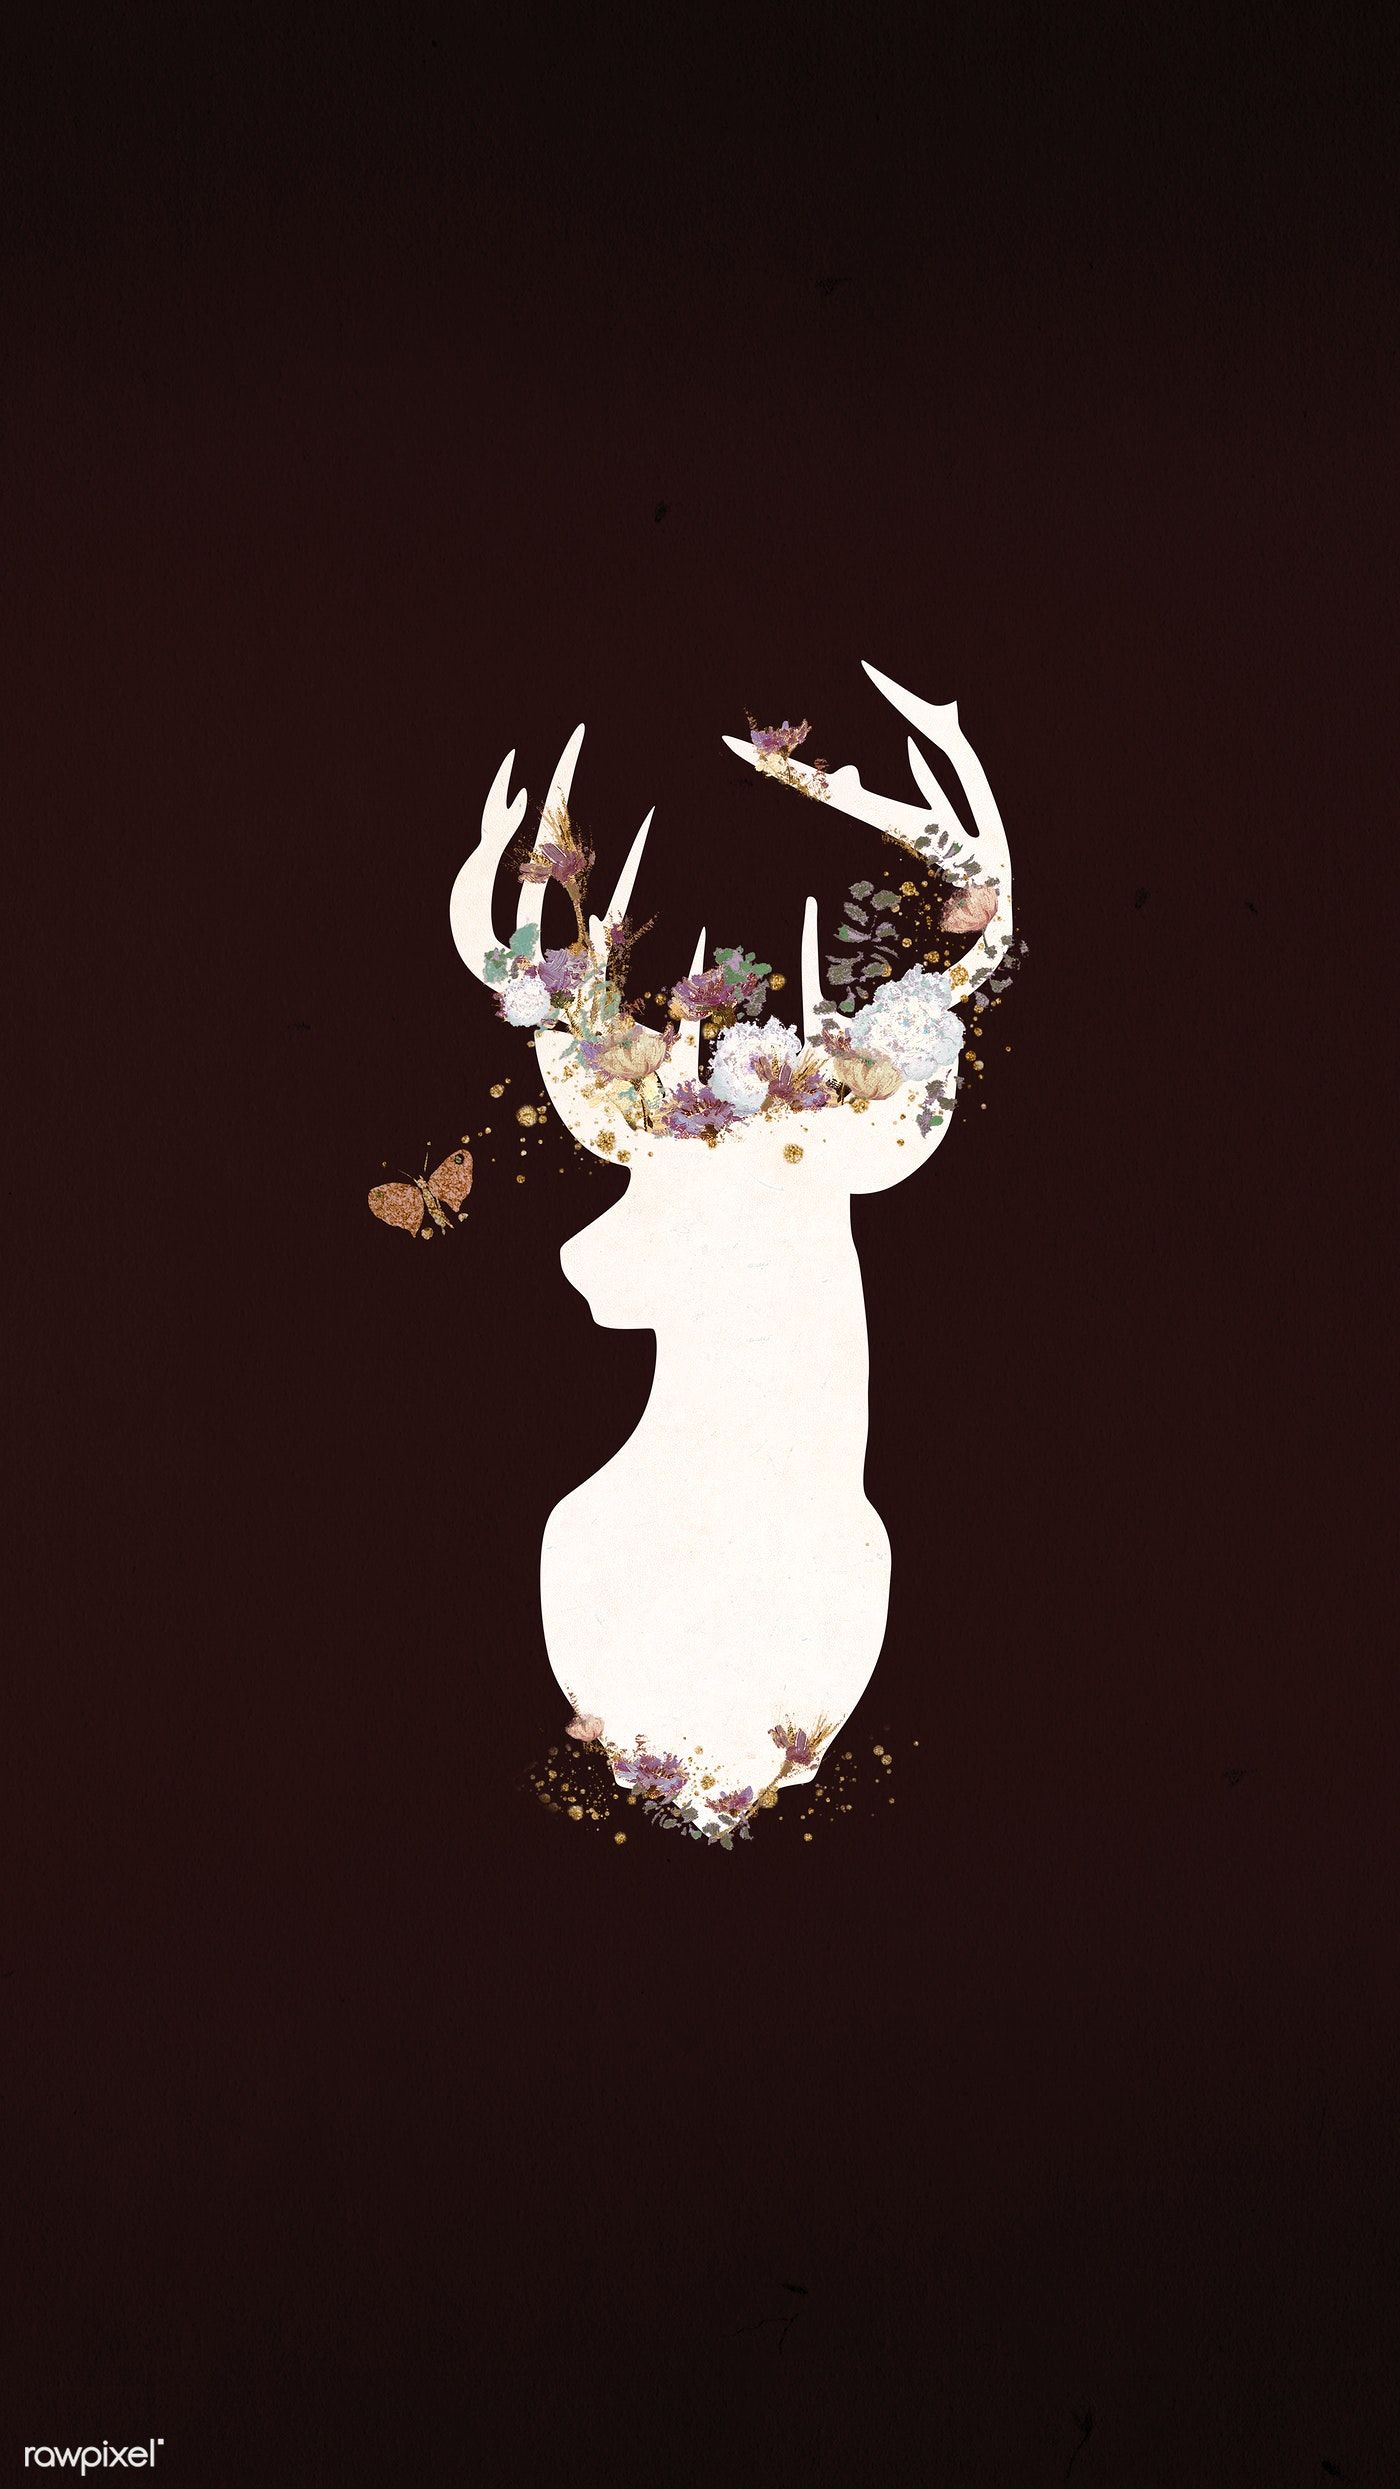 Download premium psd / image of Deer head silhouette painting mobile phone wallpaper illustration by Benjamas about deer, watercolor, gold deer, deer silhouette. Deer wallpaper, Silhouette painting, Deer illustration